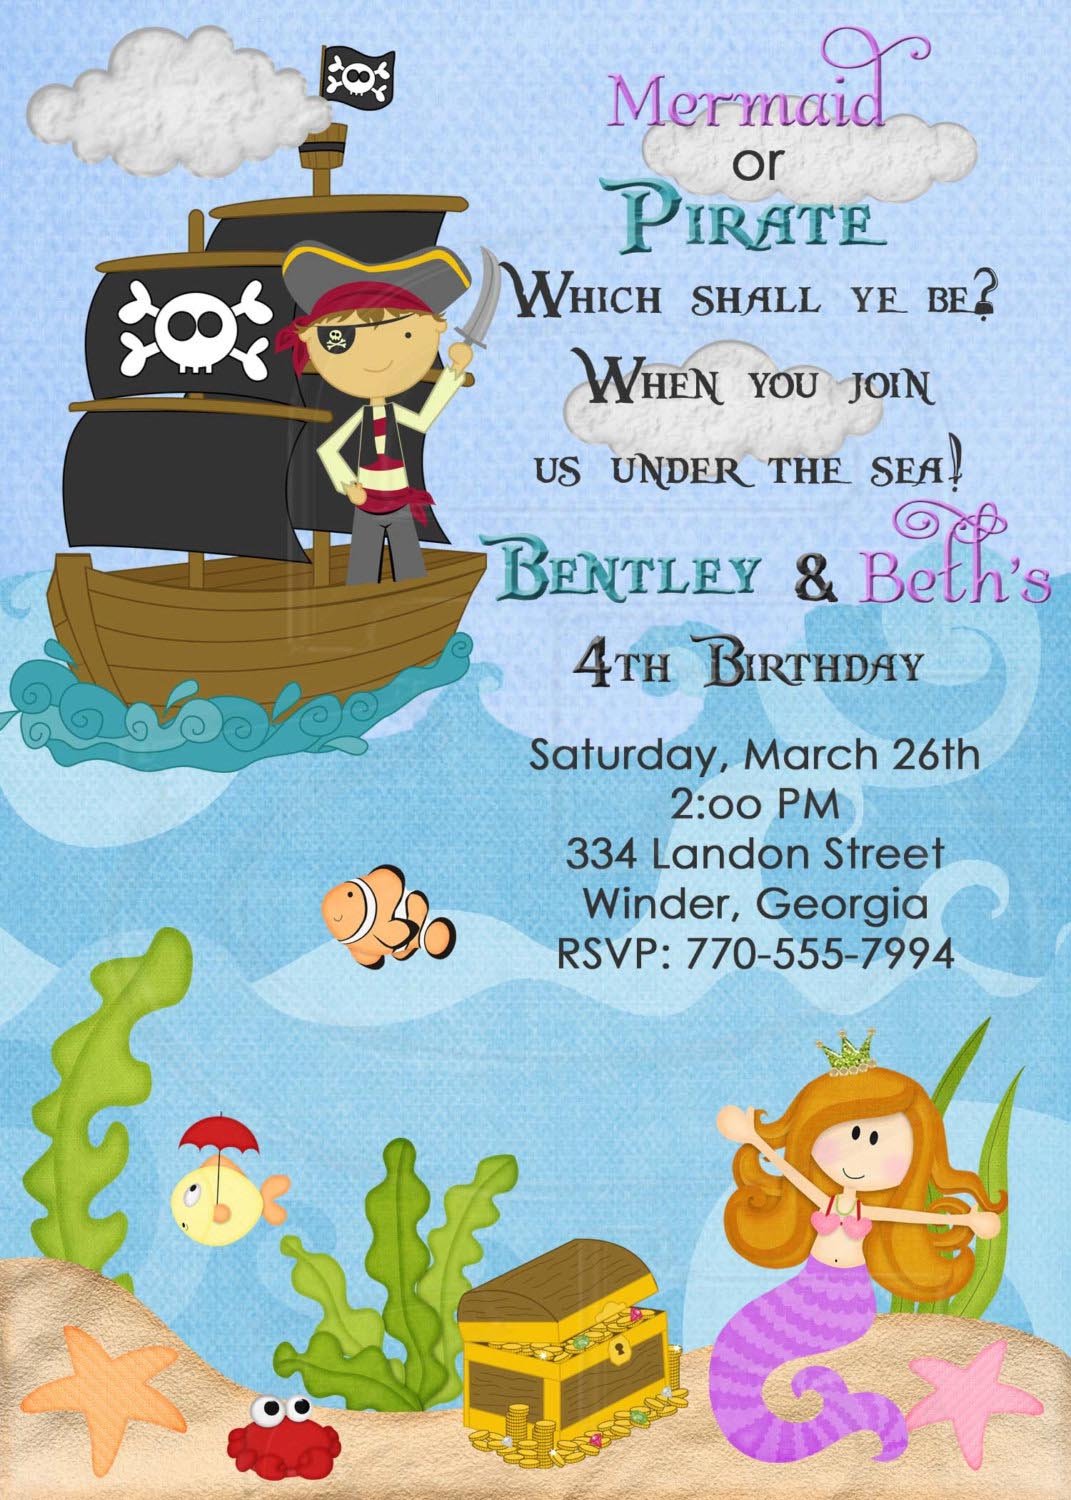 Mermaid Pirate Party Invitations